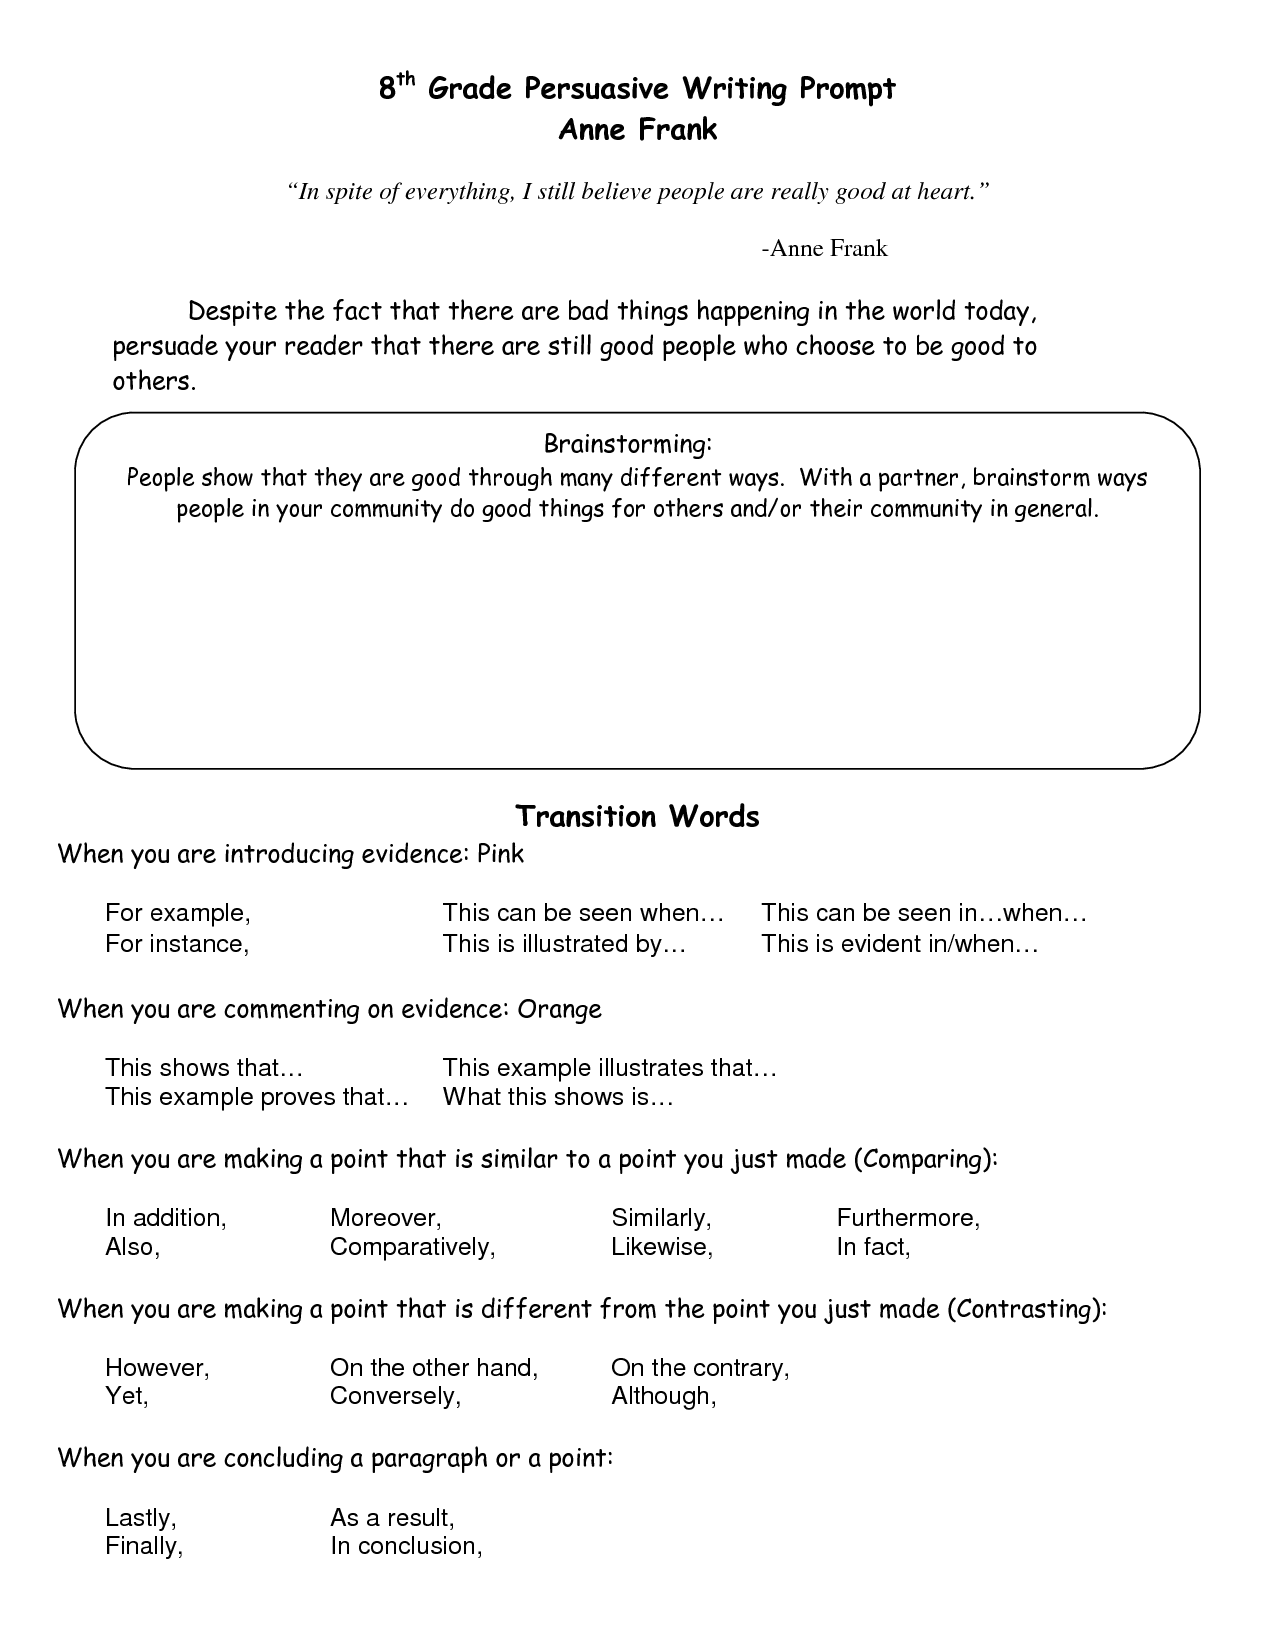 Argumentative Essays 8th Grade Transition Words Image